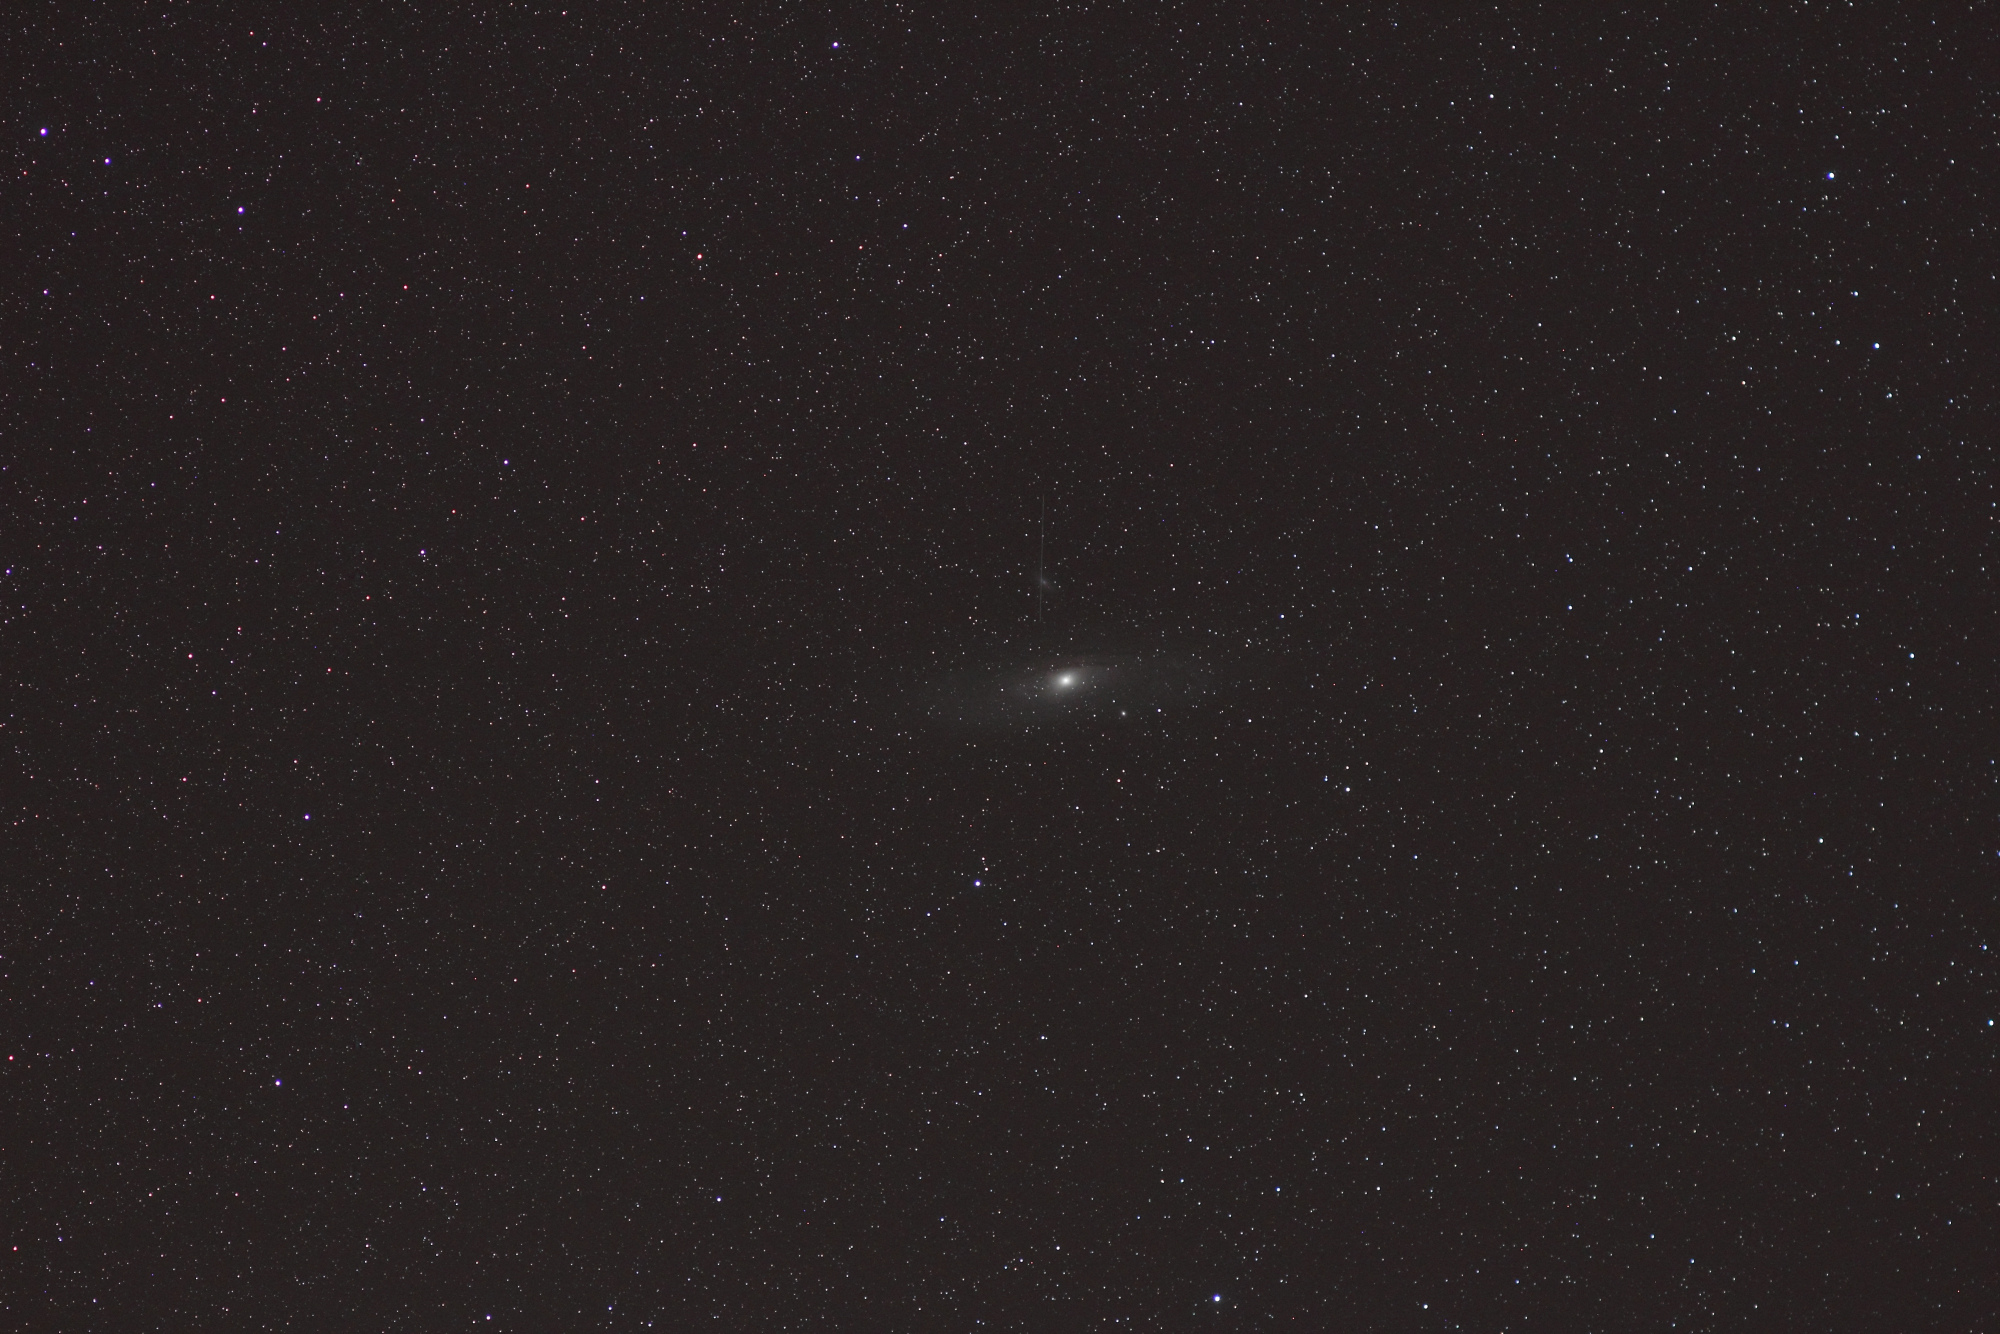 M31.JPG